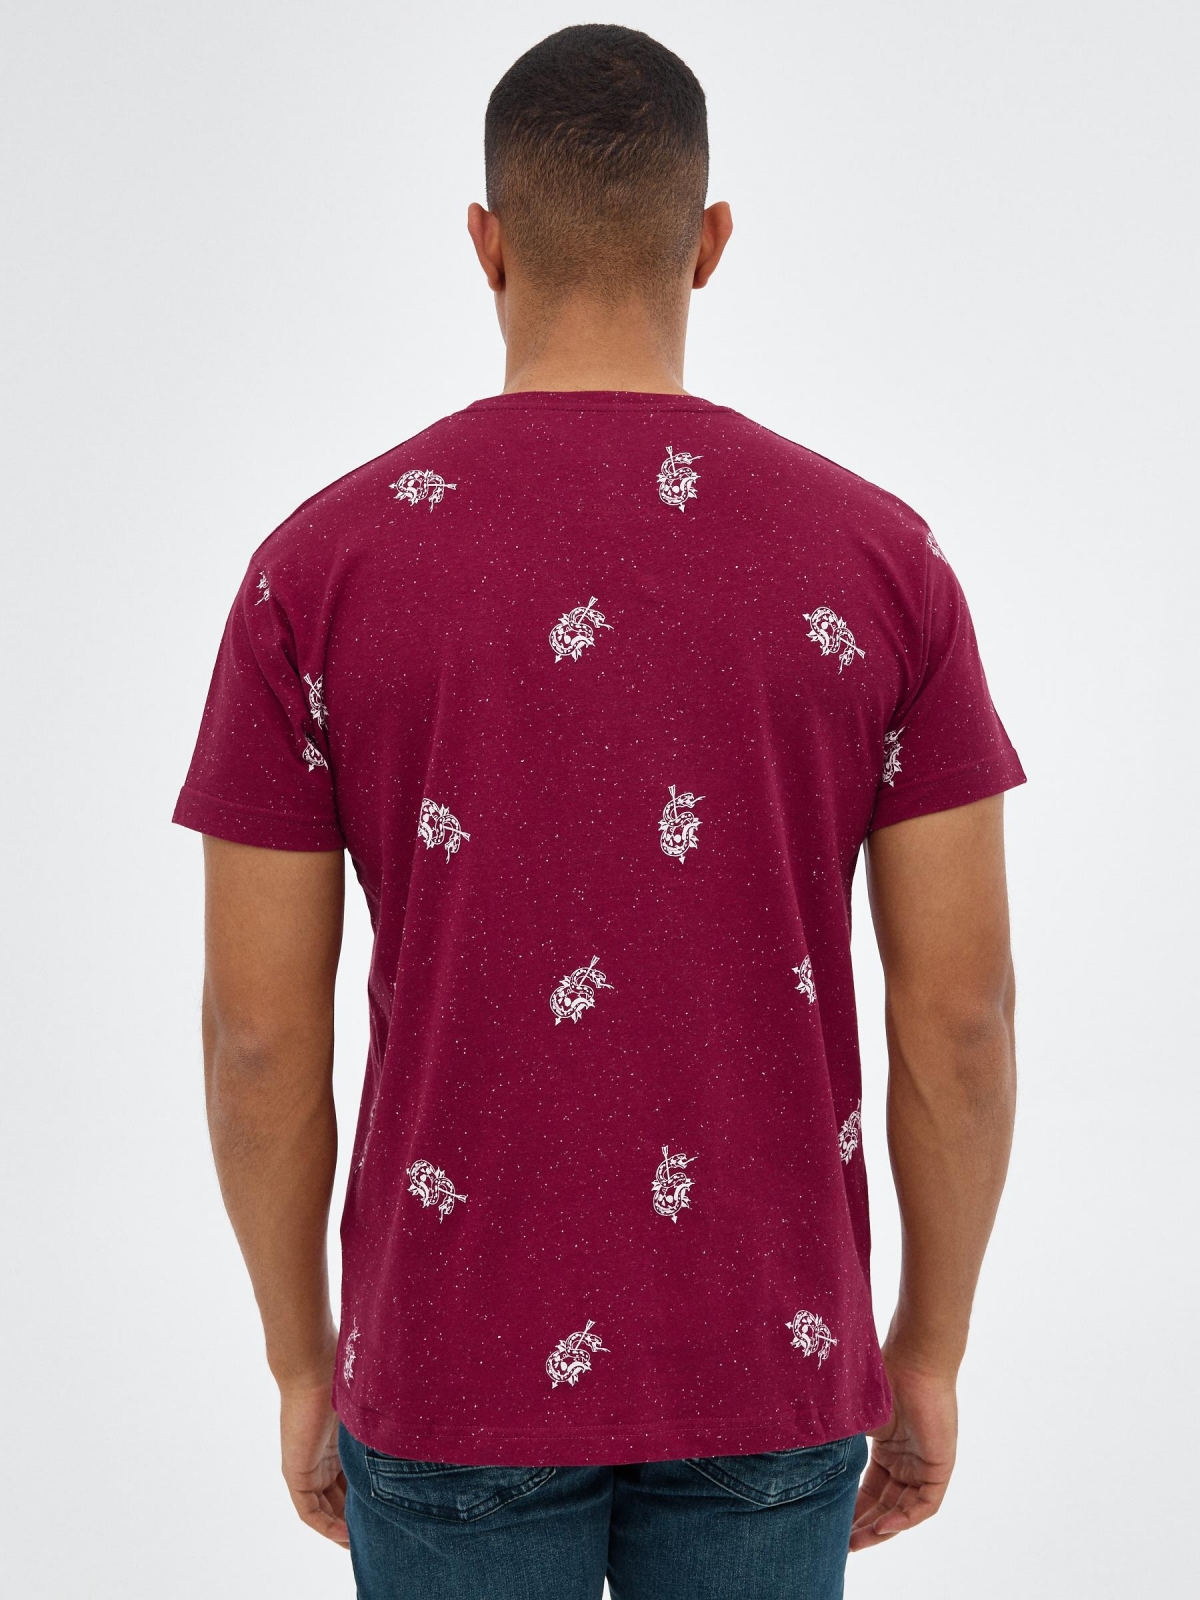 Speckled print t-shirt garnet middle back view